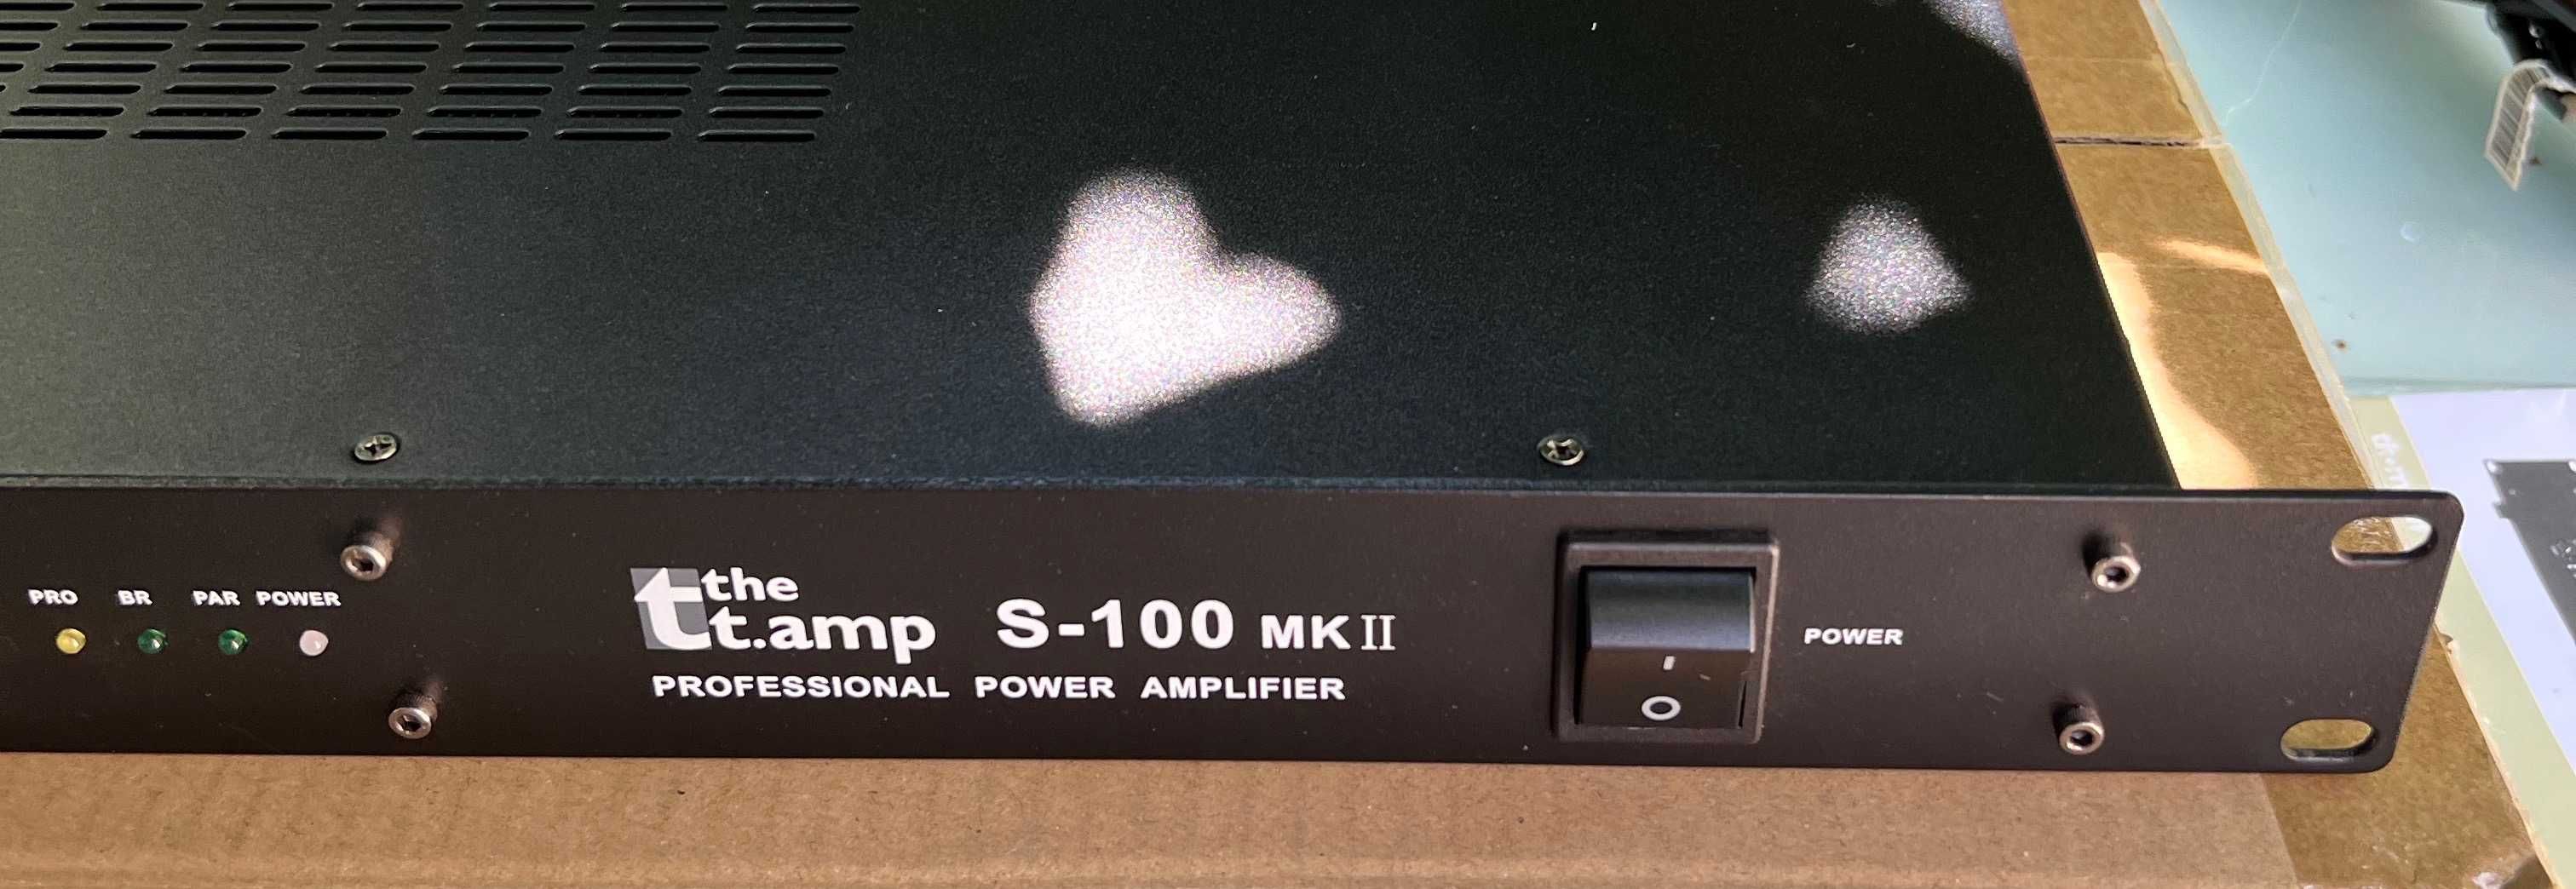 Amplificator de putere The t-amp S-100 Mk II, studio,monitoare,nou.